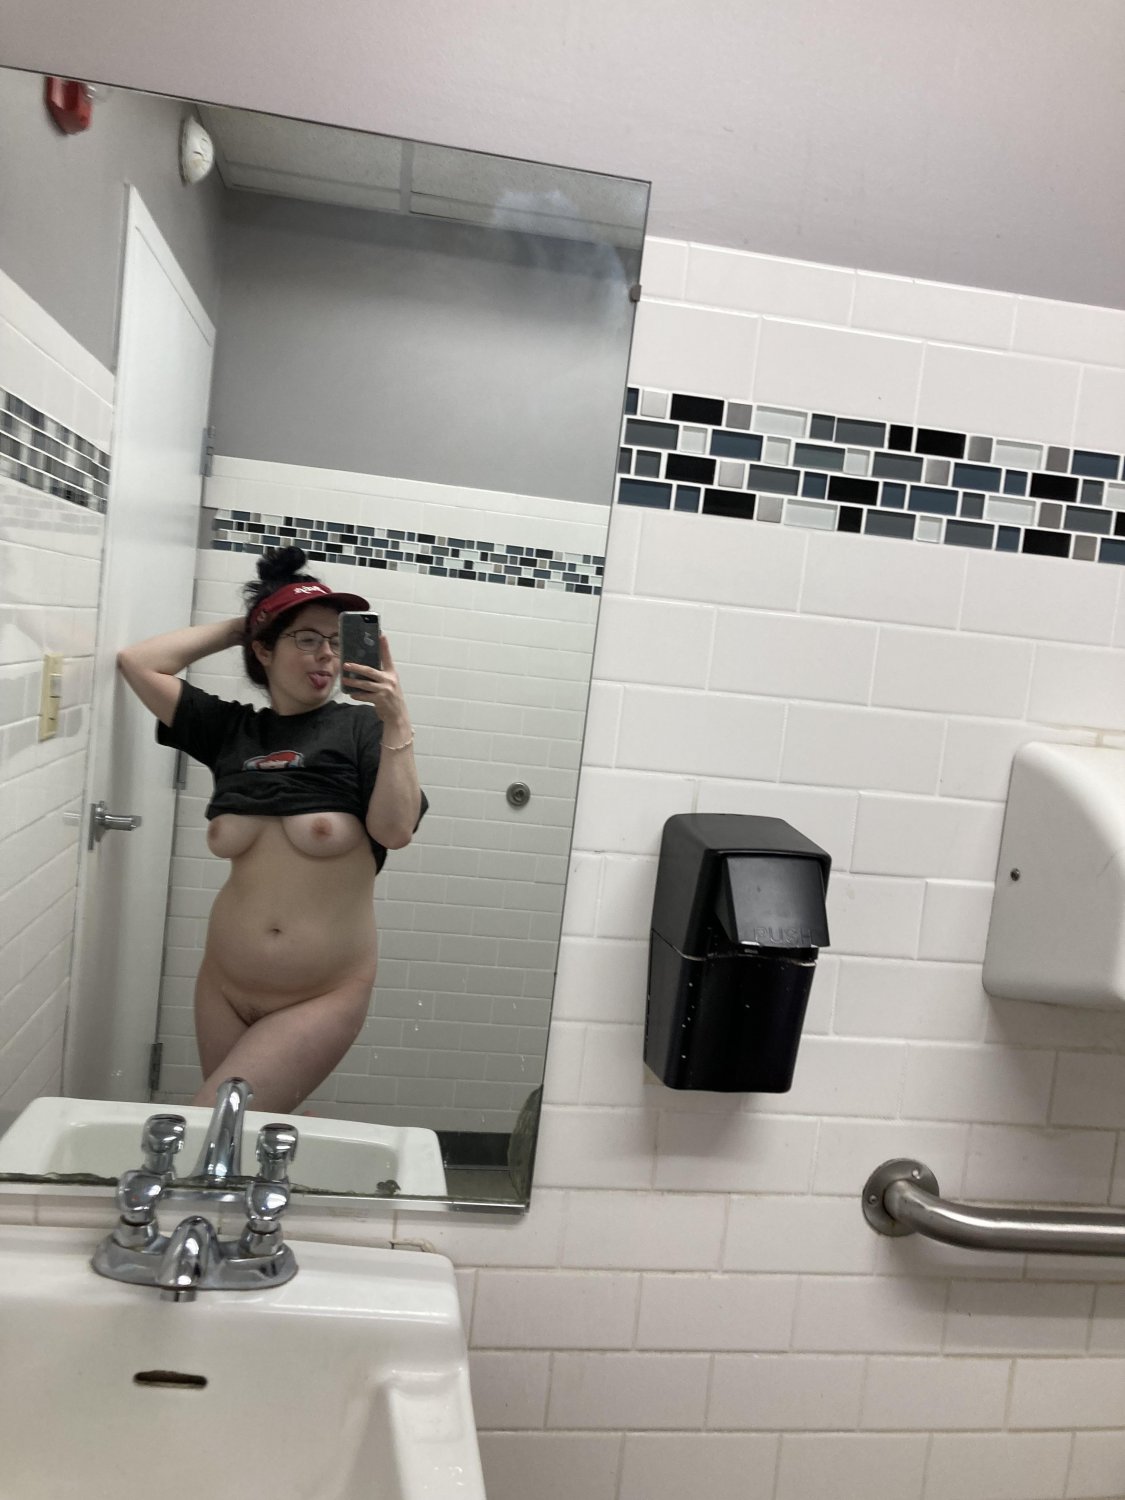 Wendys Worker masturbating in bathroom - Porn